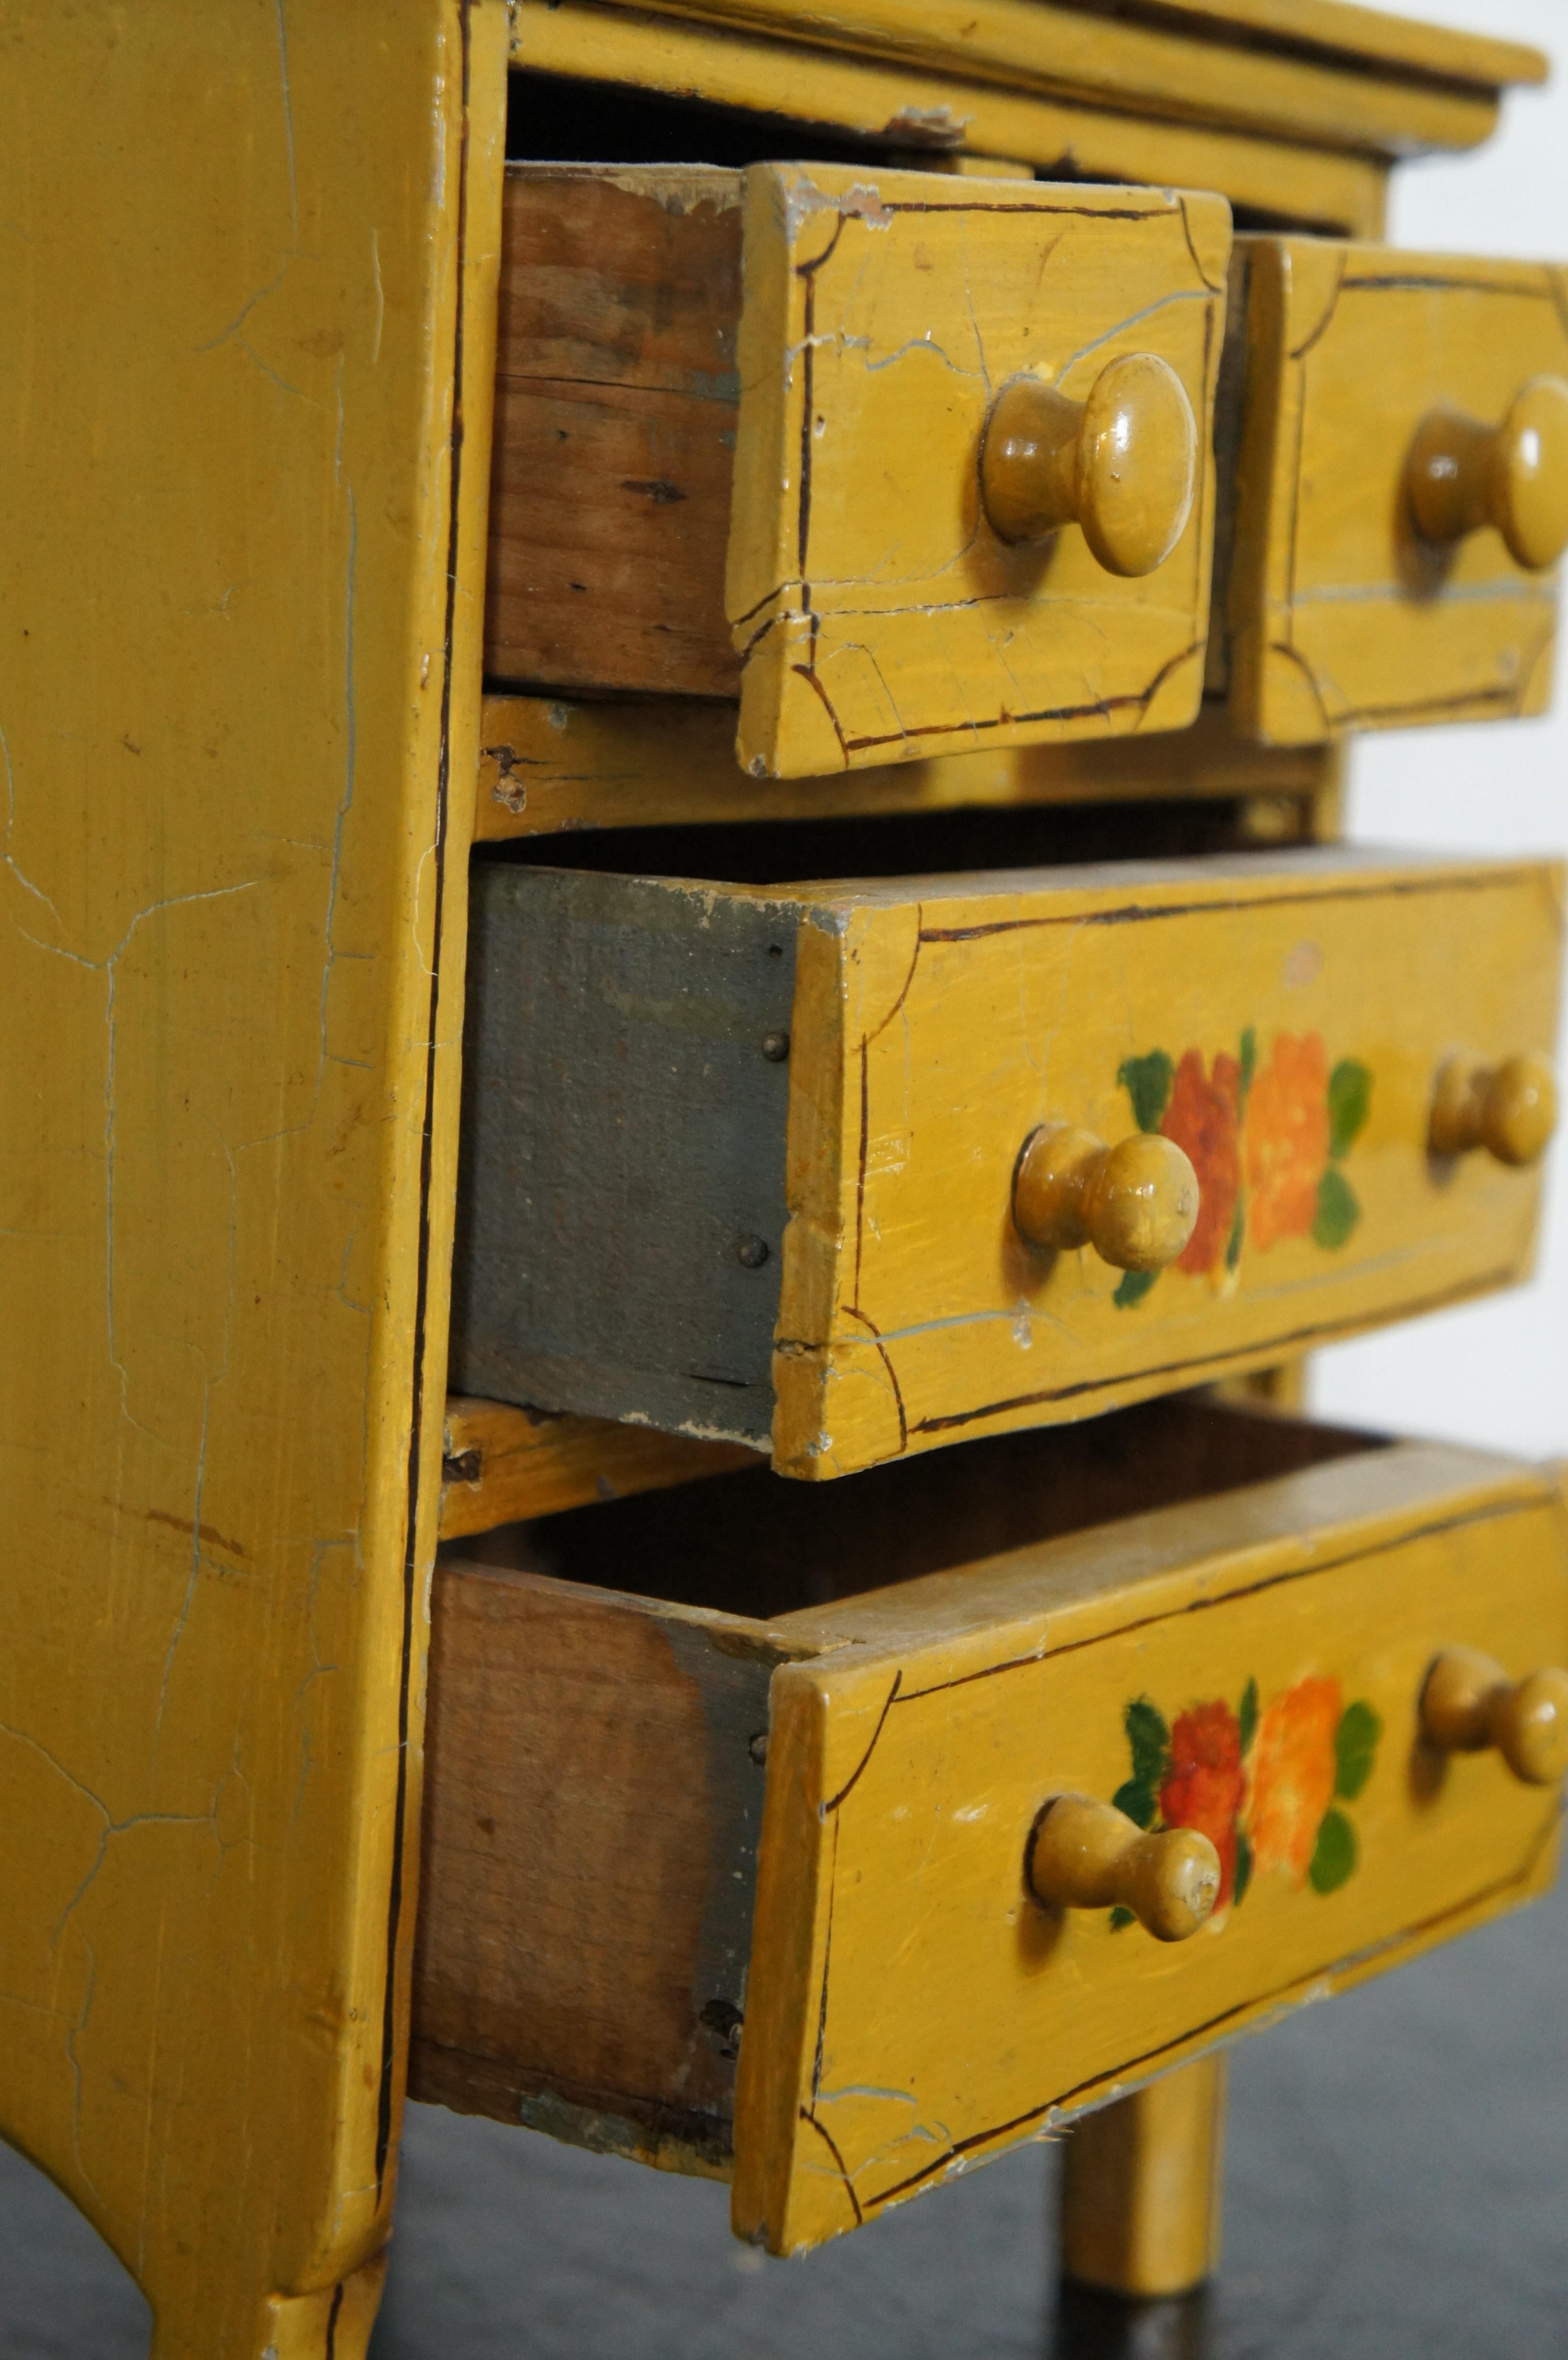 Antique Miniature Folk Art Yellow Painted Dresser Chest of Drawers 11